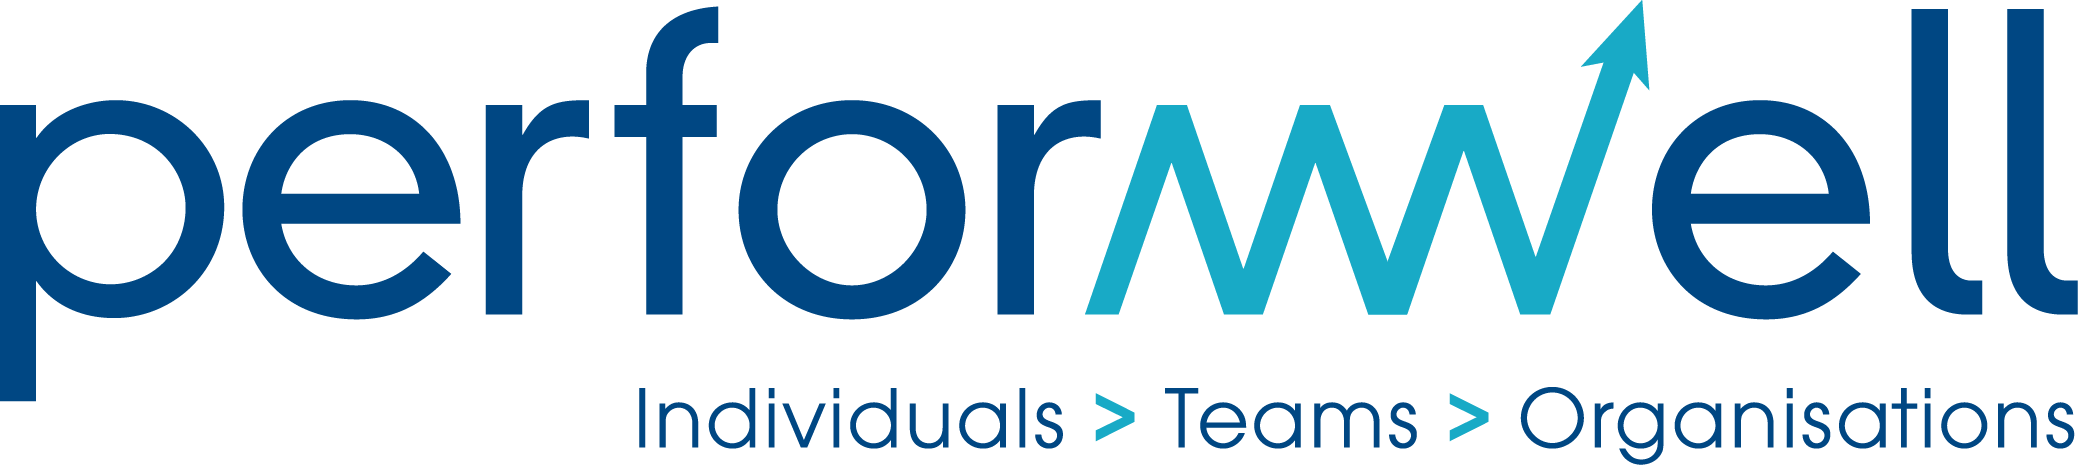 performwell logo 1